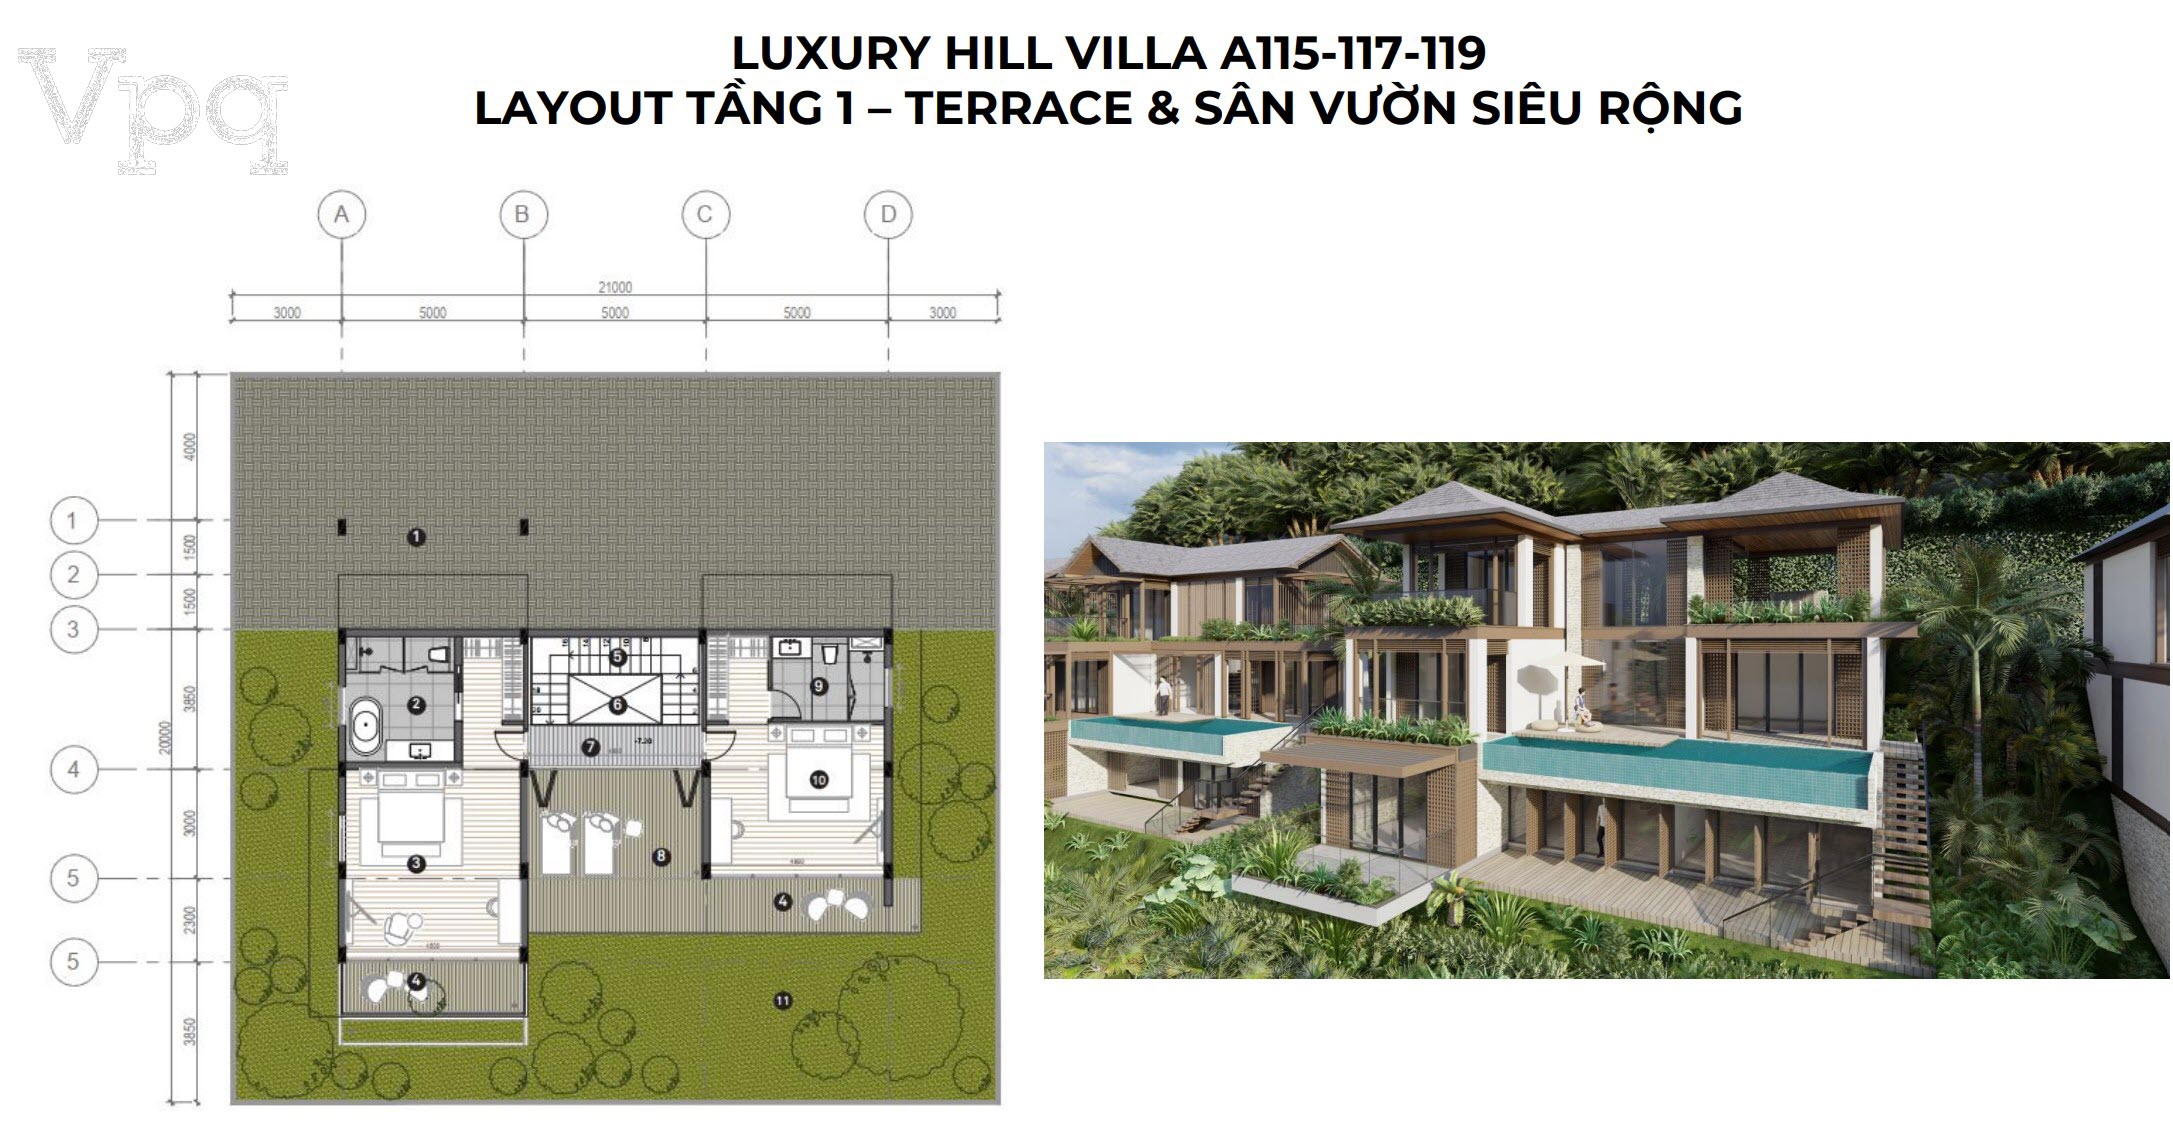 Layout tầng 1 Luxury Hill Villa A115-A117-A119